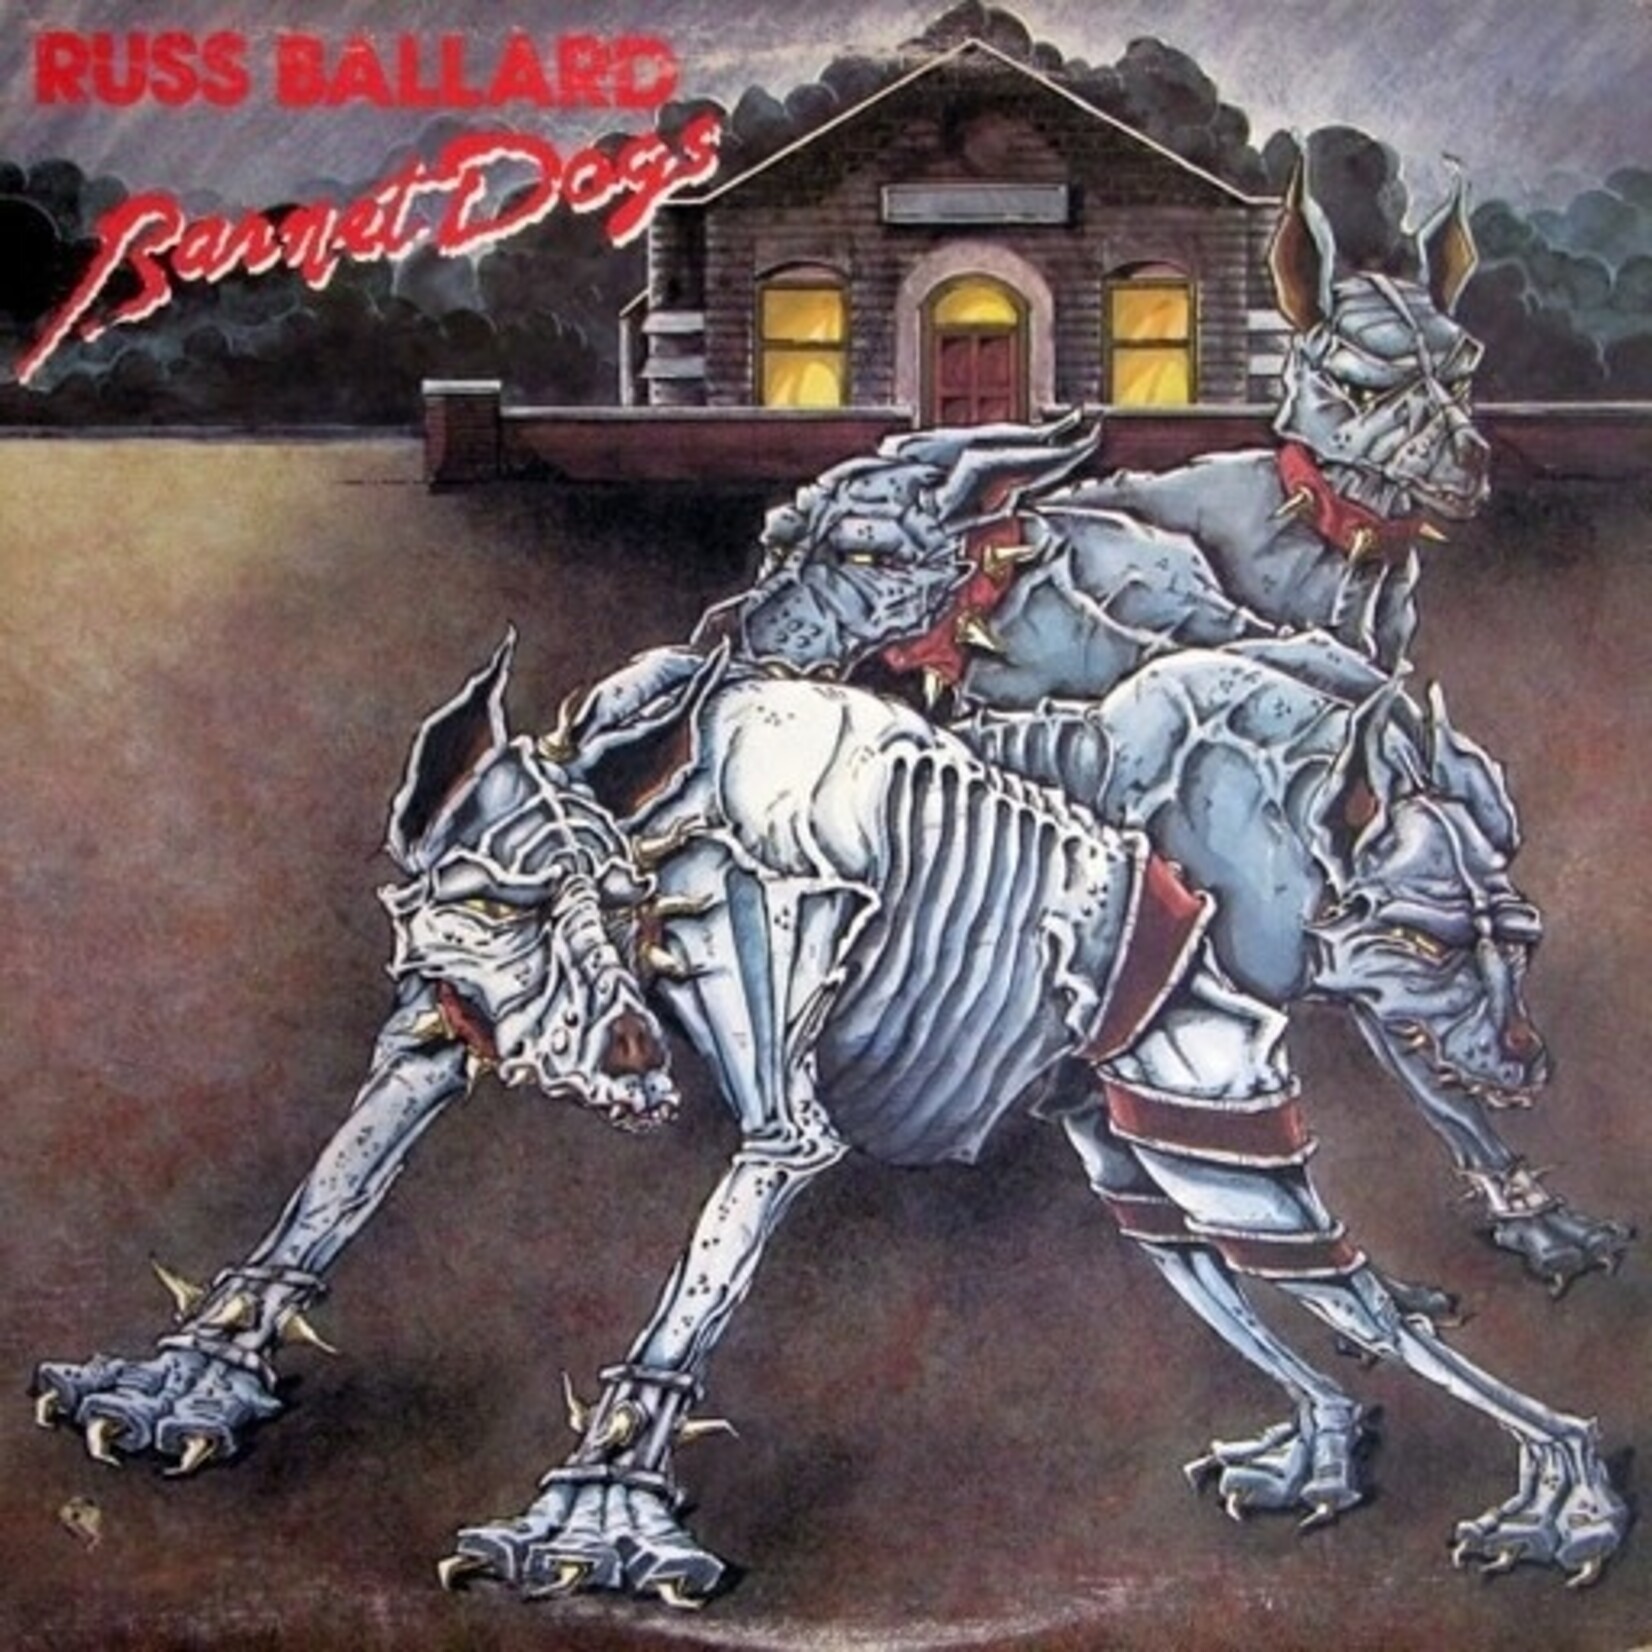 [Vintage] Russ Ballard - Barnet Dogs